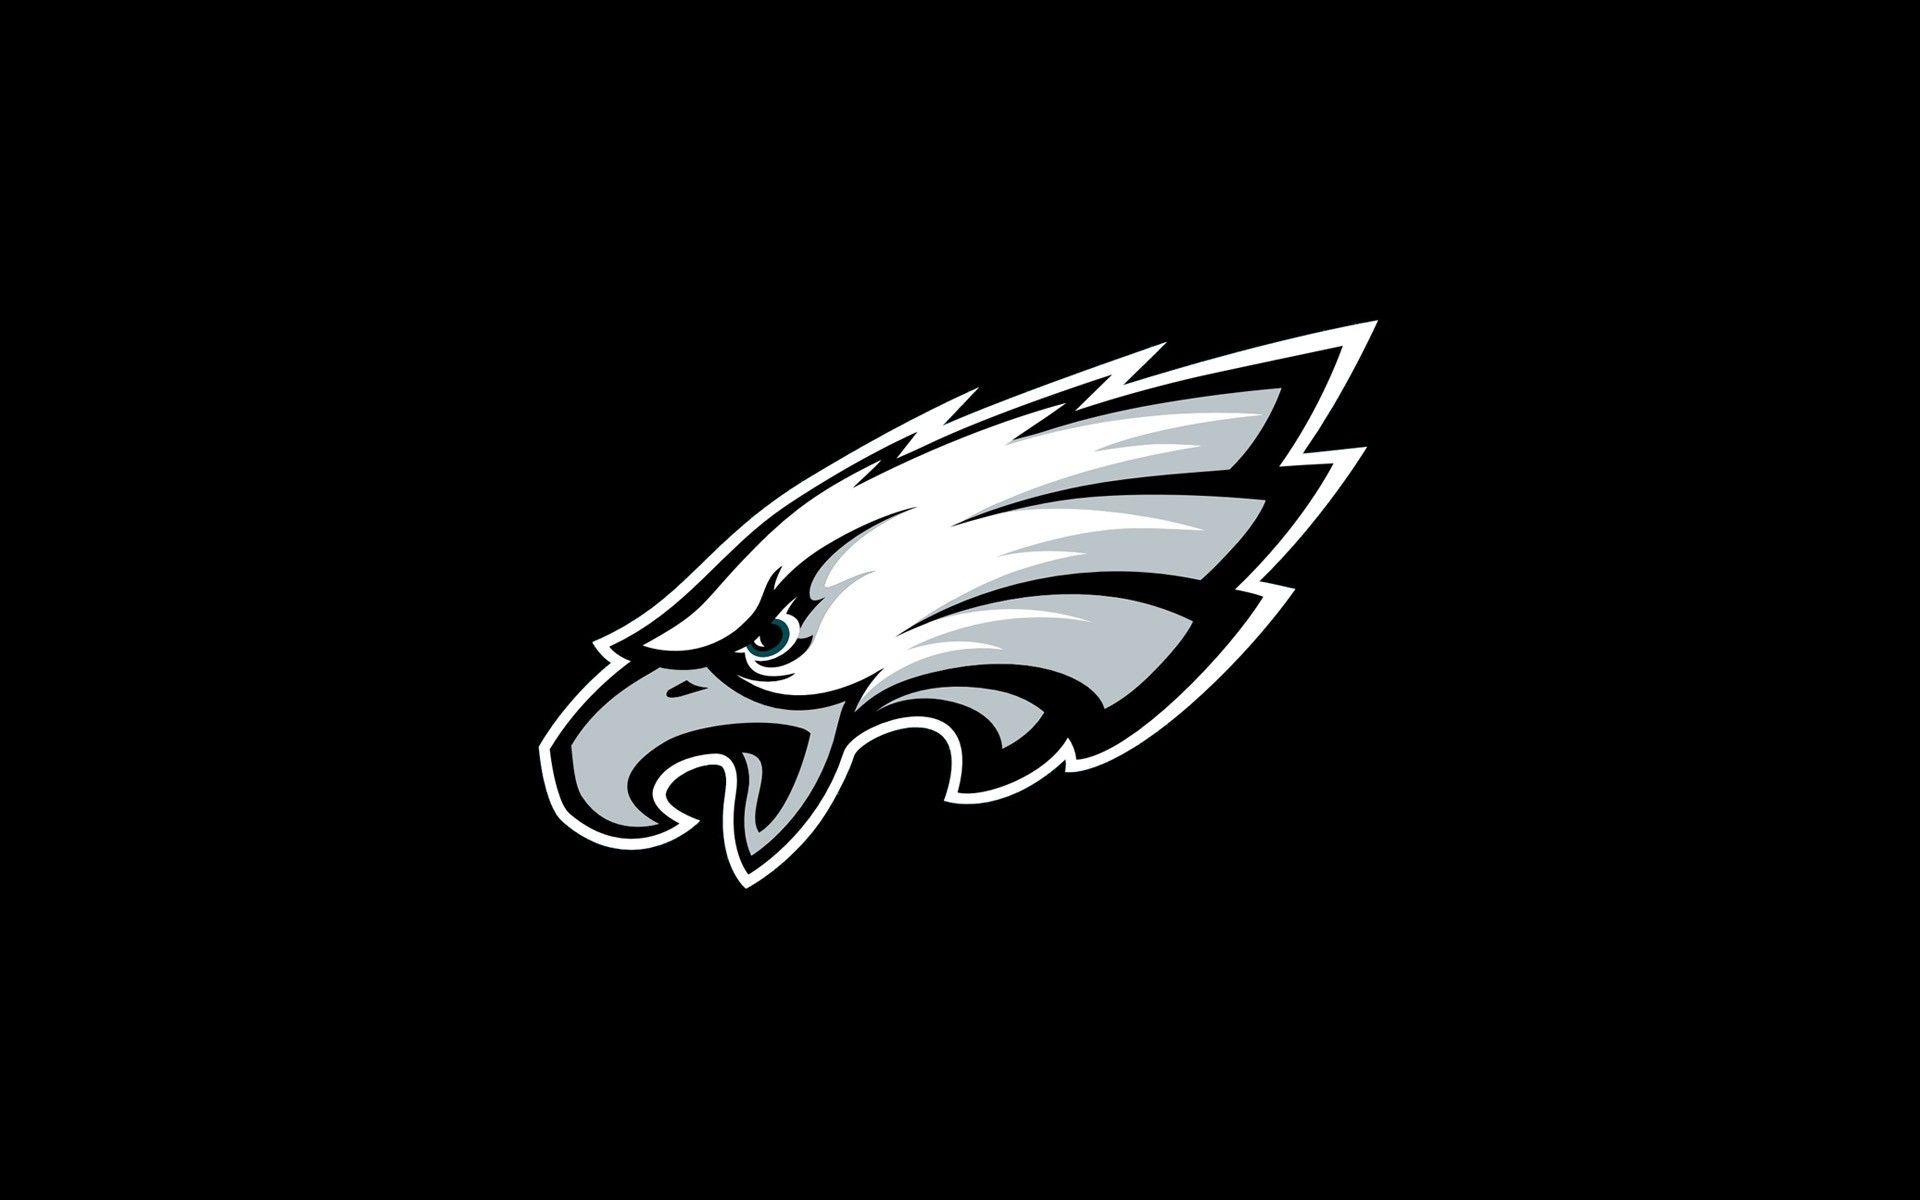 Philadelphia Eagles Logo Desktop Wallpaper 55959 1920x1200 px